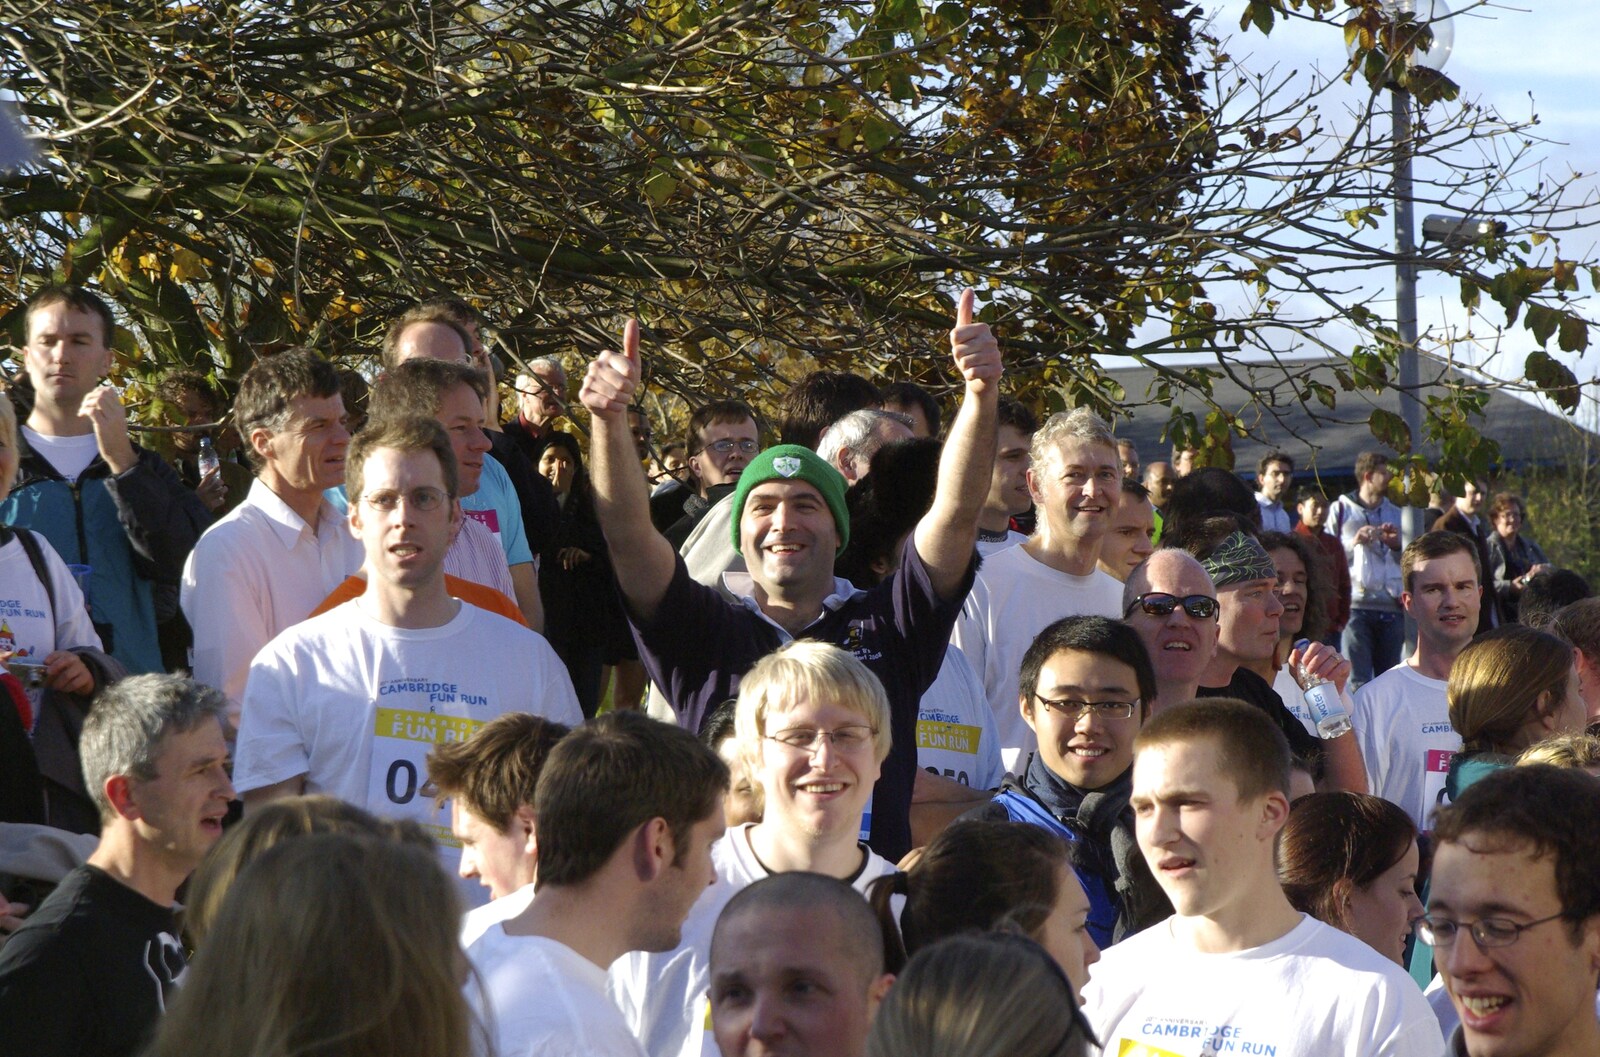 The Cambridge Fun Run, Milton Road, Cambridge - 14th November 2008: Conor gives it the thumbs-up